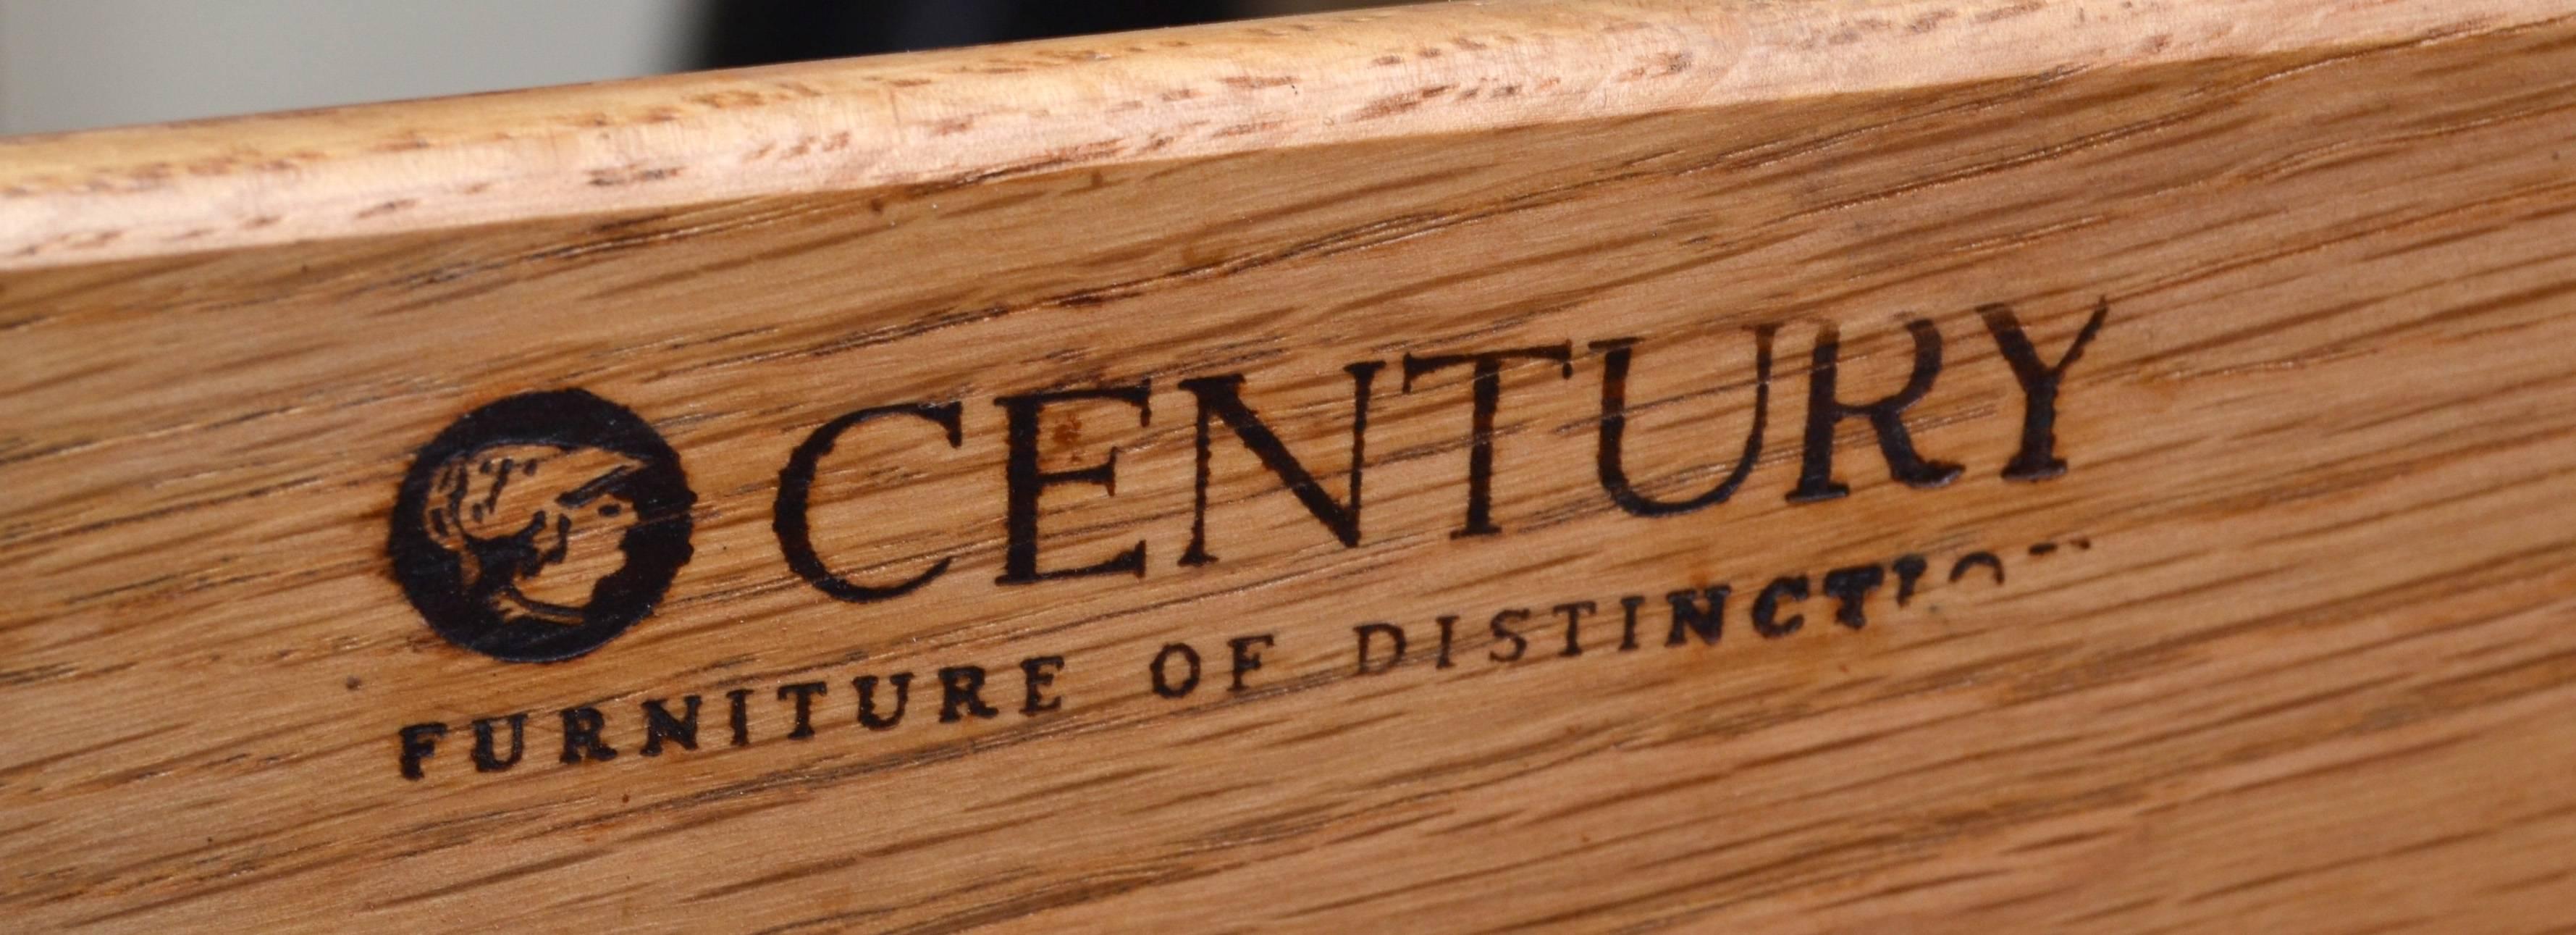 century furniture of distinction credenza